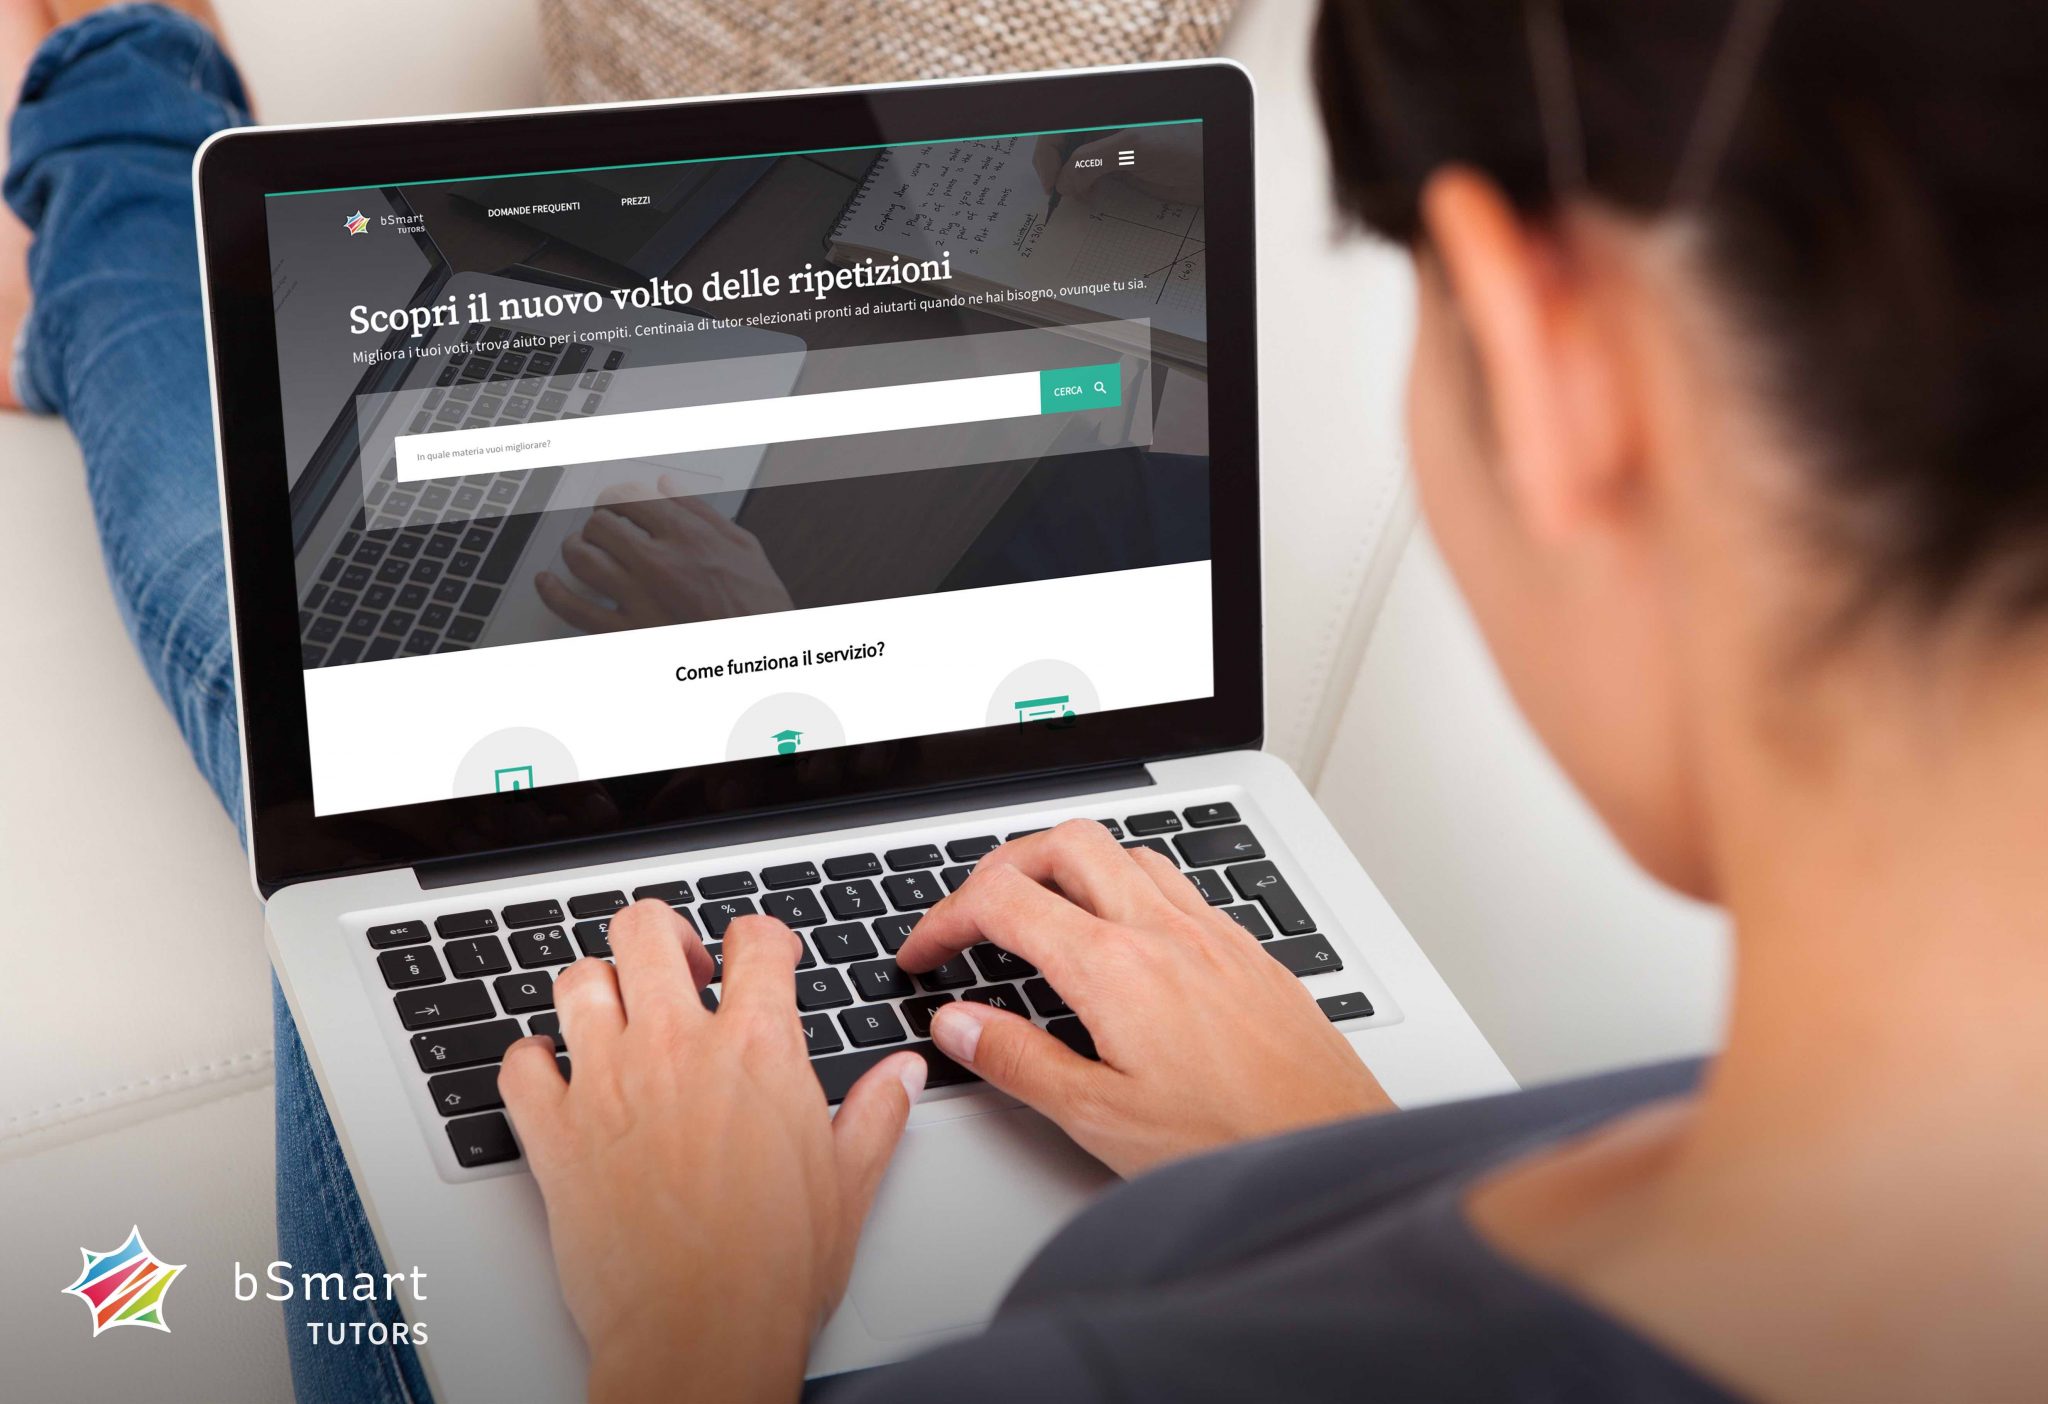 bSmart Tutors: A New Solution for Online Tutoring